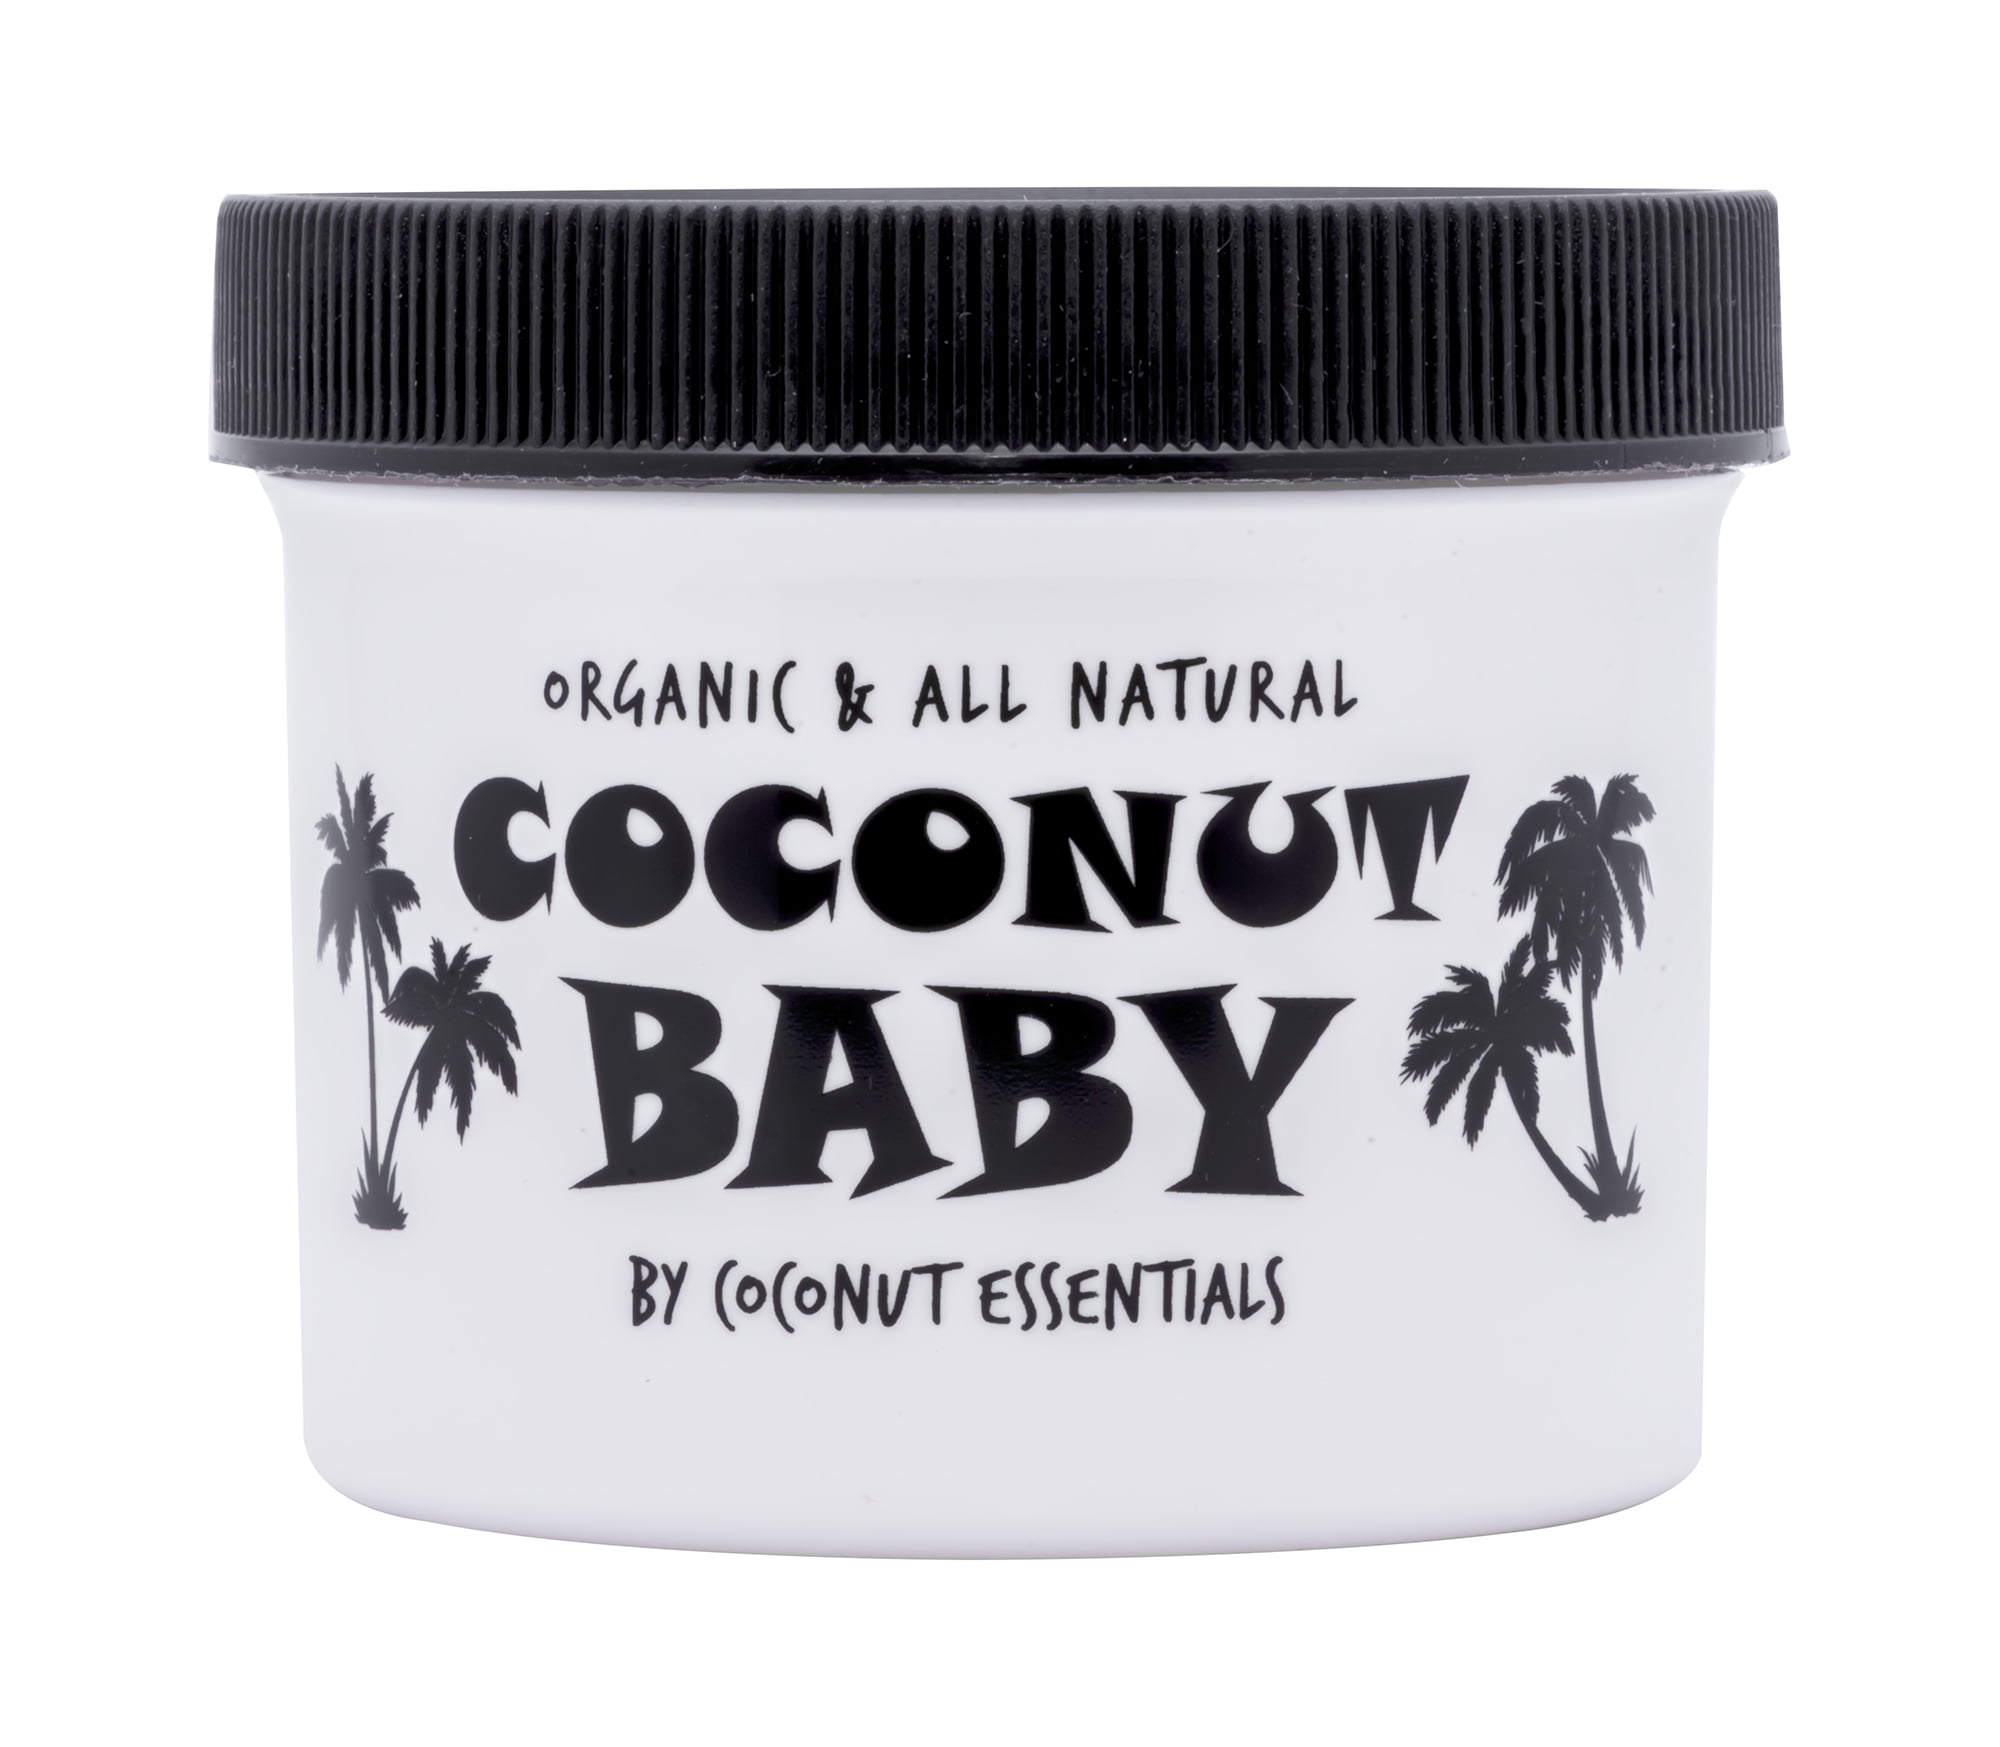 COCONUT BABY Skin & Hair oils Organic all Natural Moisturizer